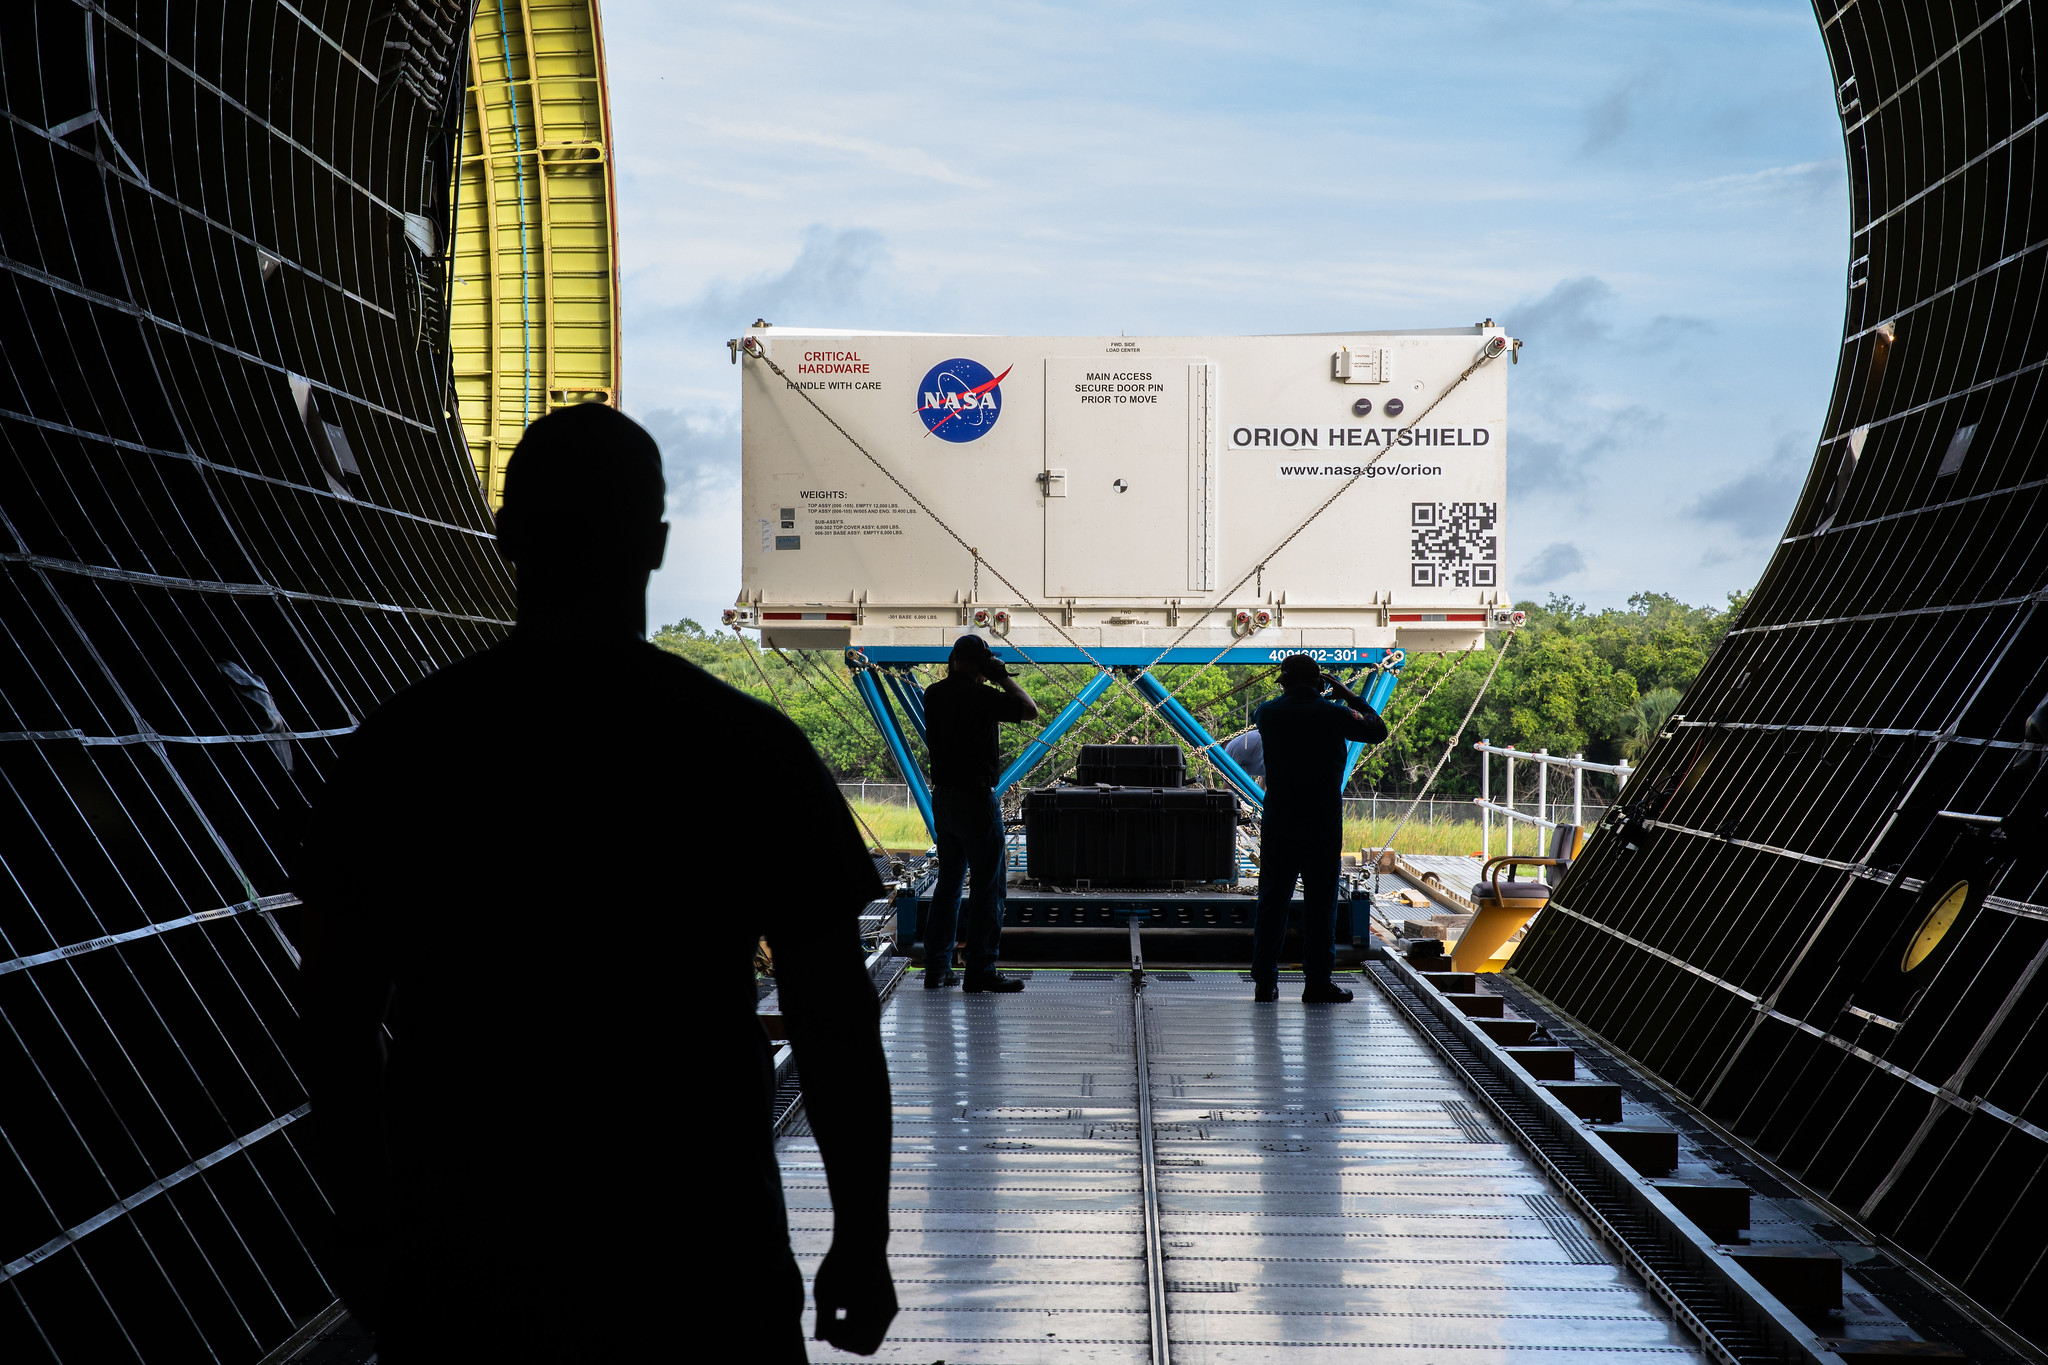 Artemis II heat shield arrives in Florida